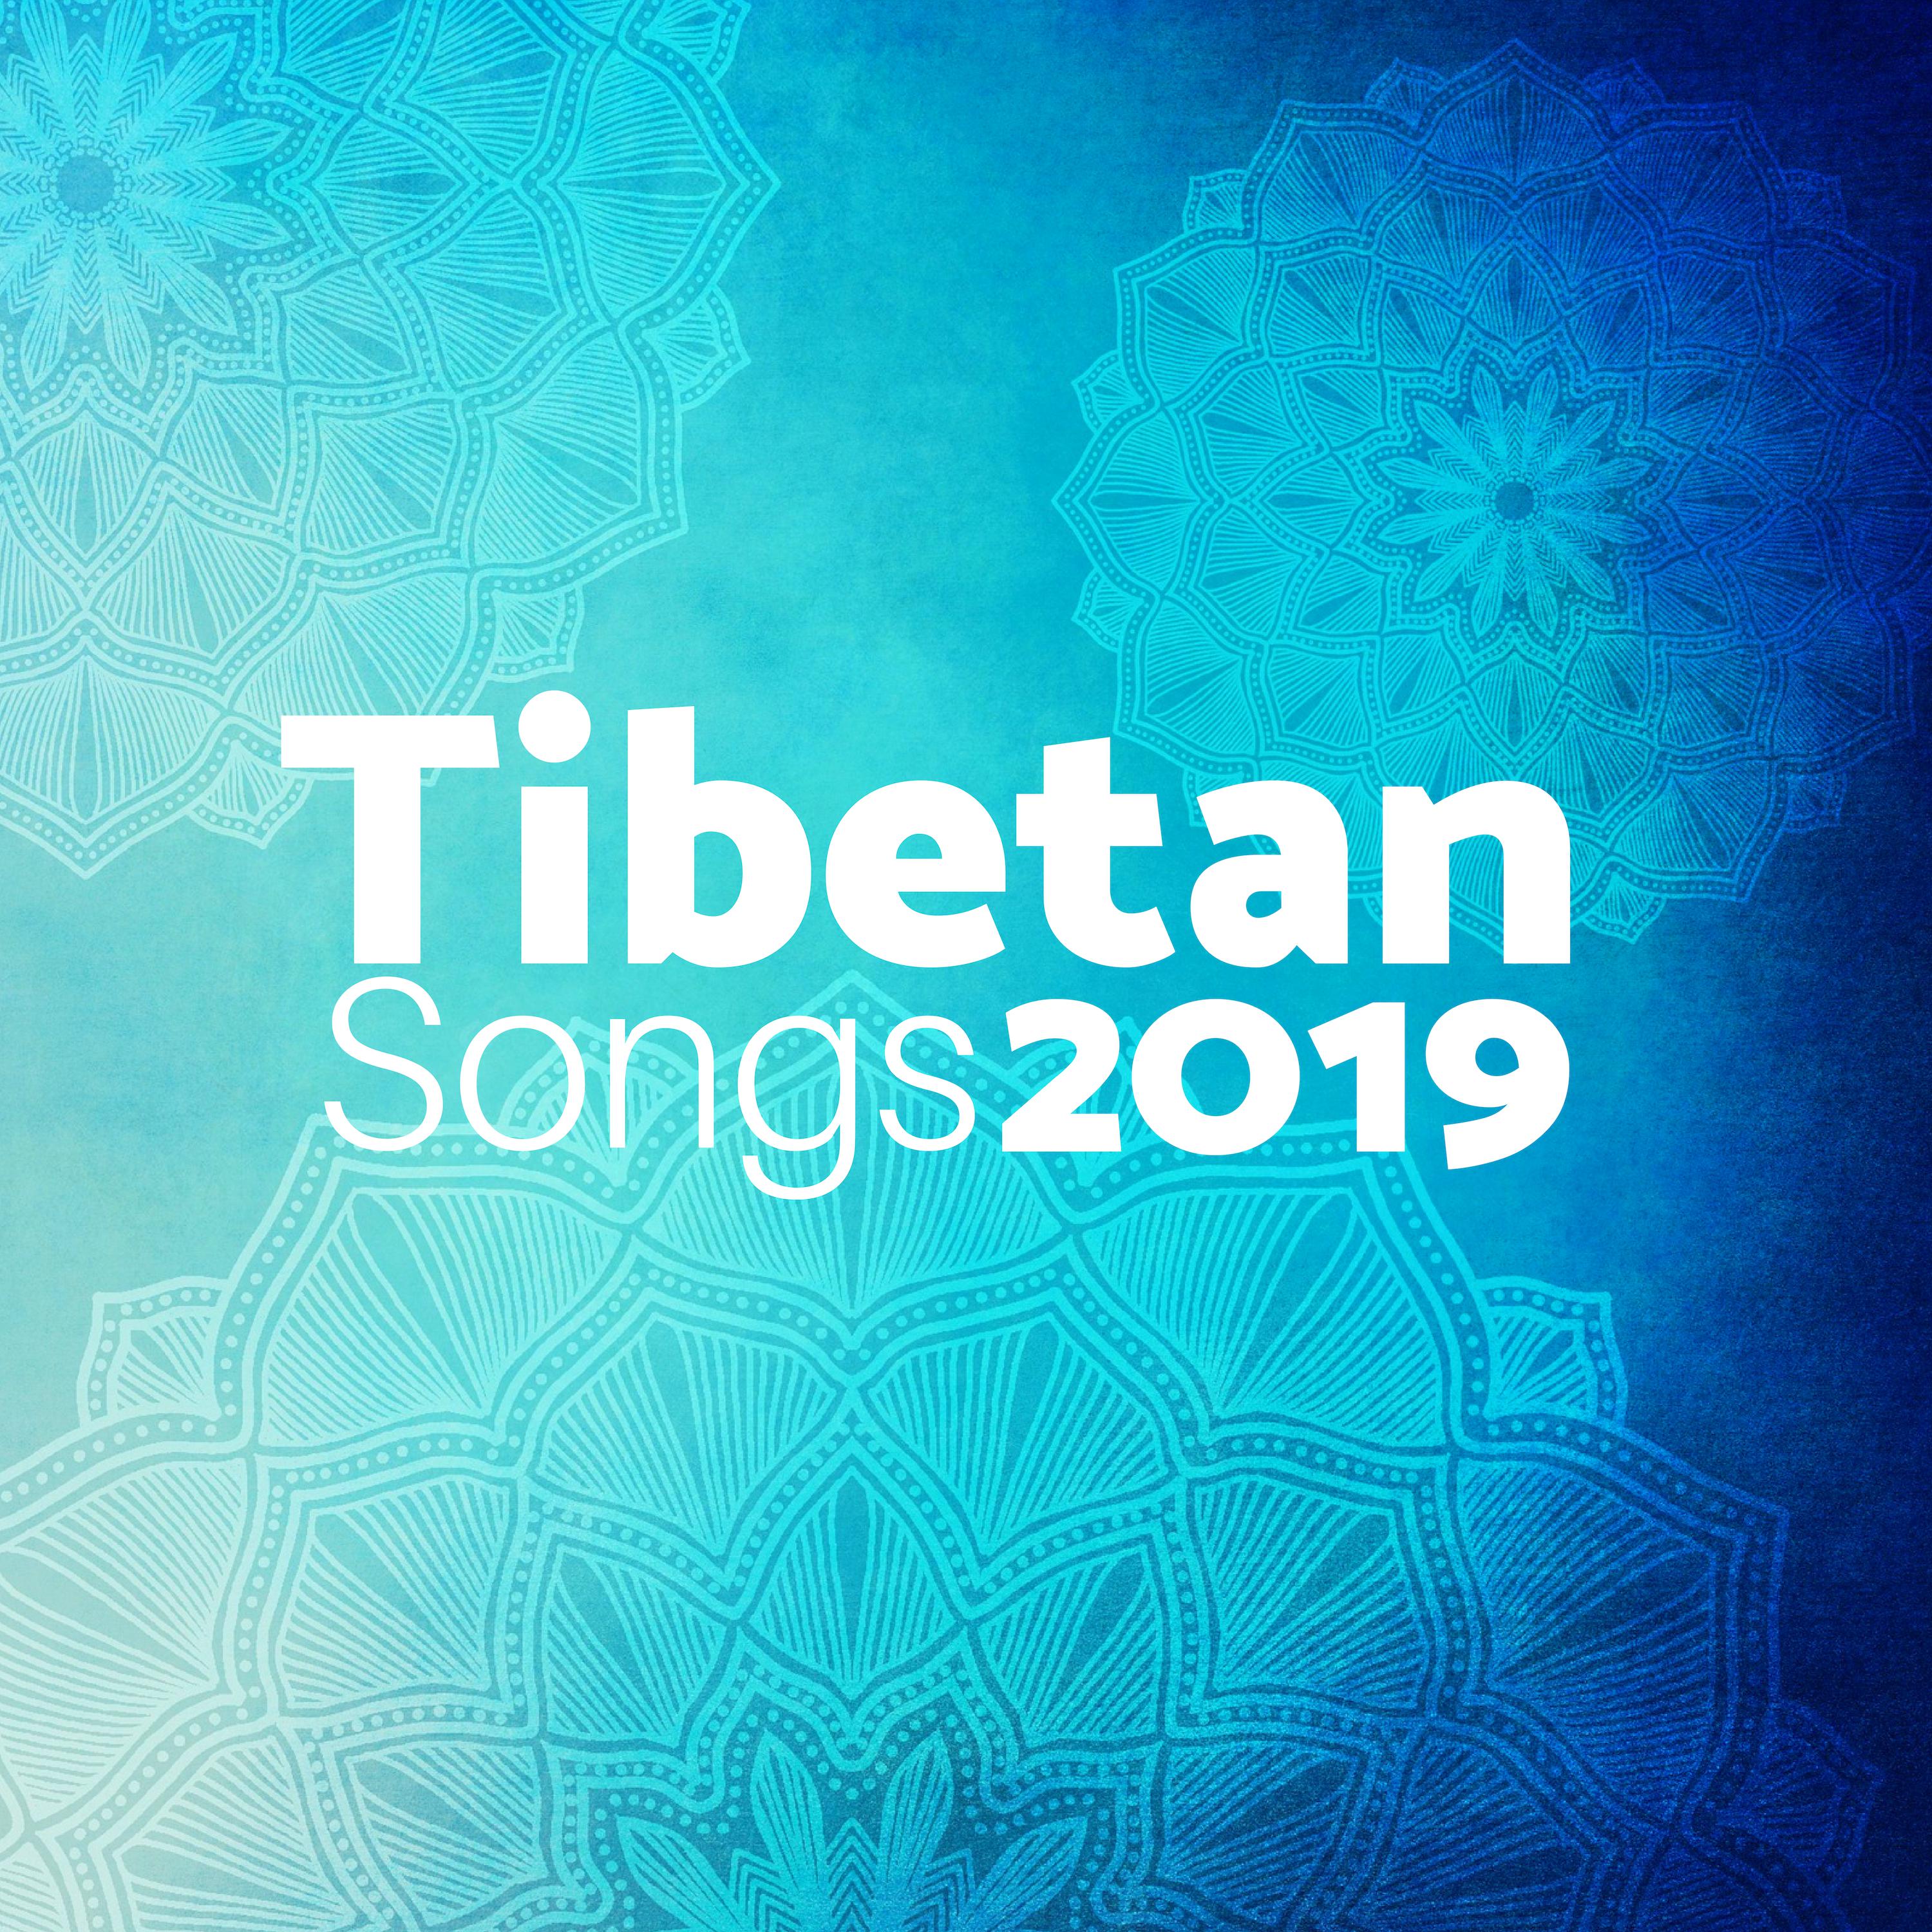 Tibetan Songs 2019 - Meditation Music, Sleep Music, Yoga Music